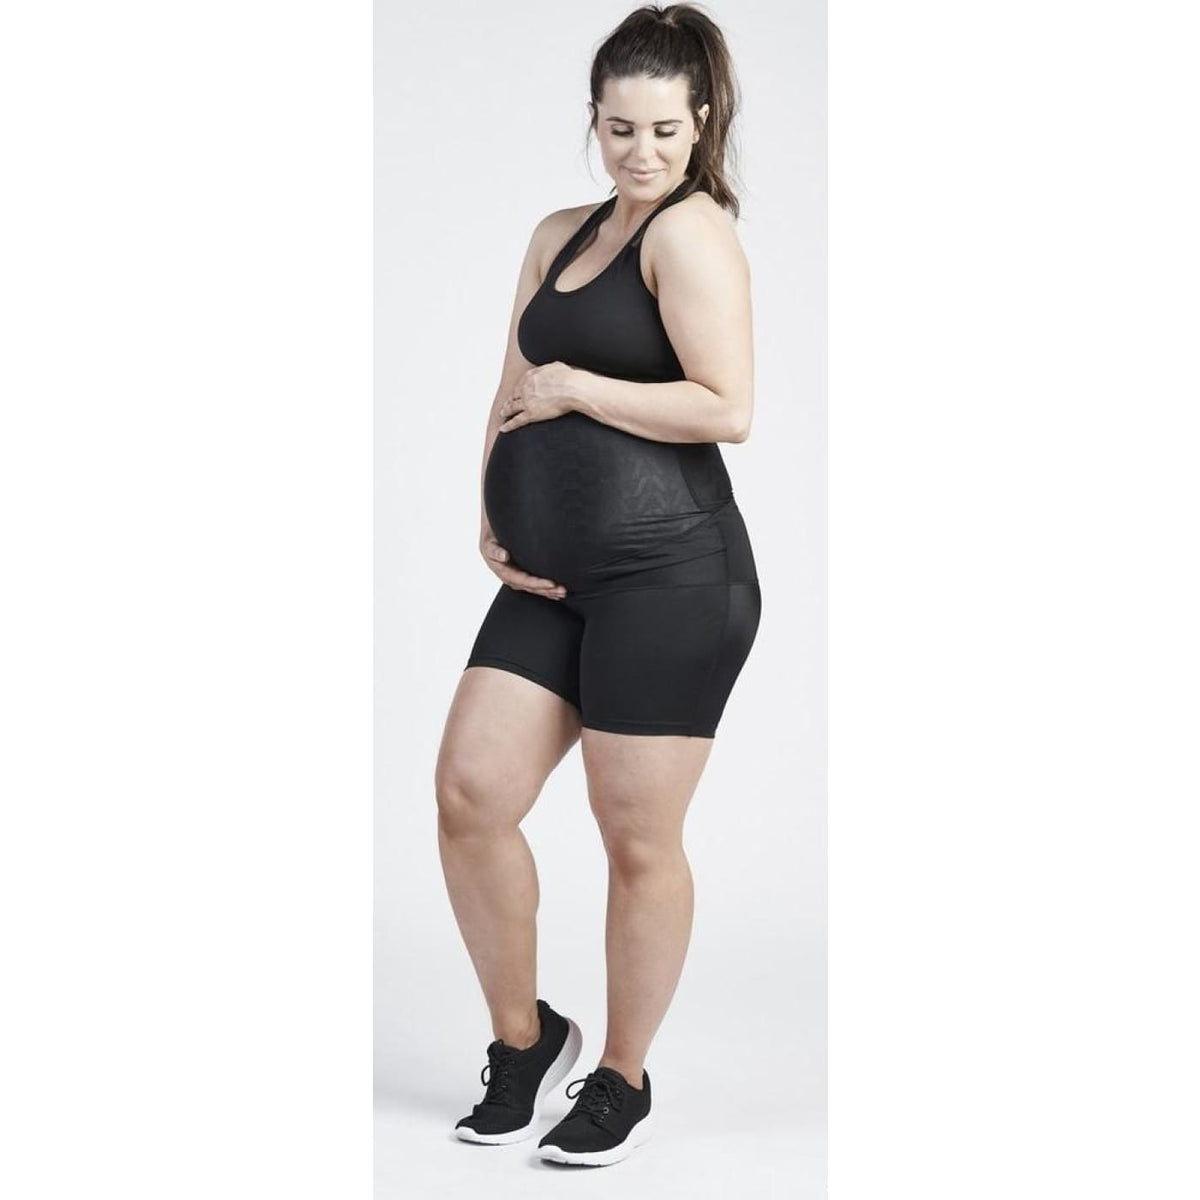 SRC Pregnancy Over the Bump Mini - Black XL - XL / Black - FOR MUM - MATERNITY SUPPORT GARMENTS (PRE/POST)